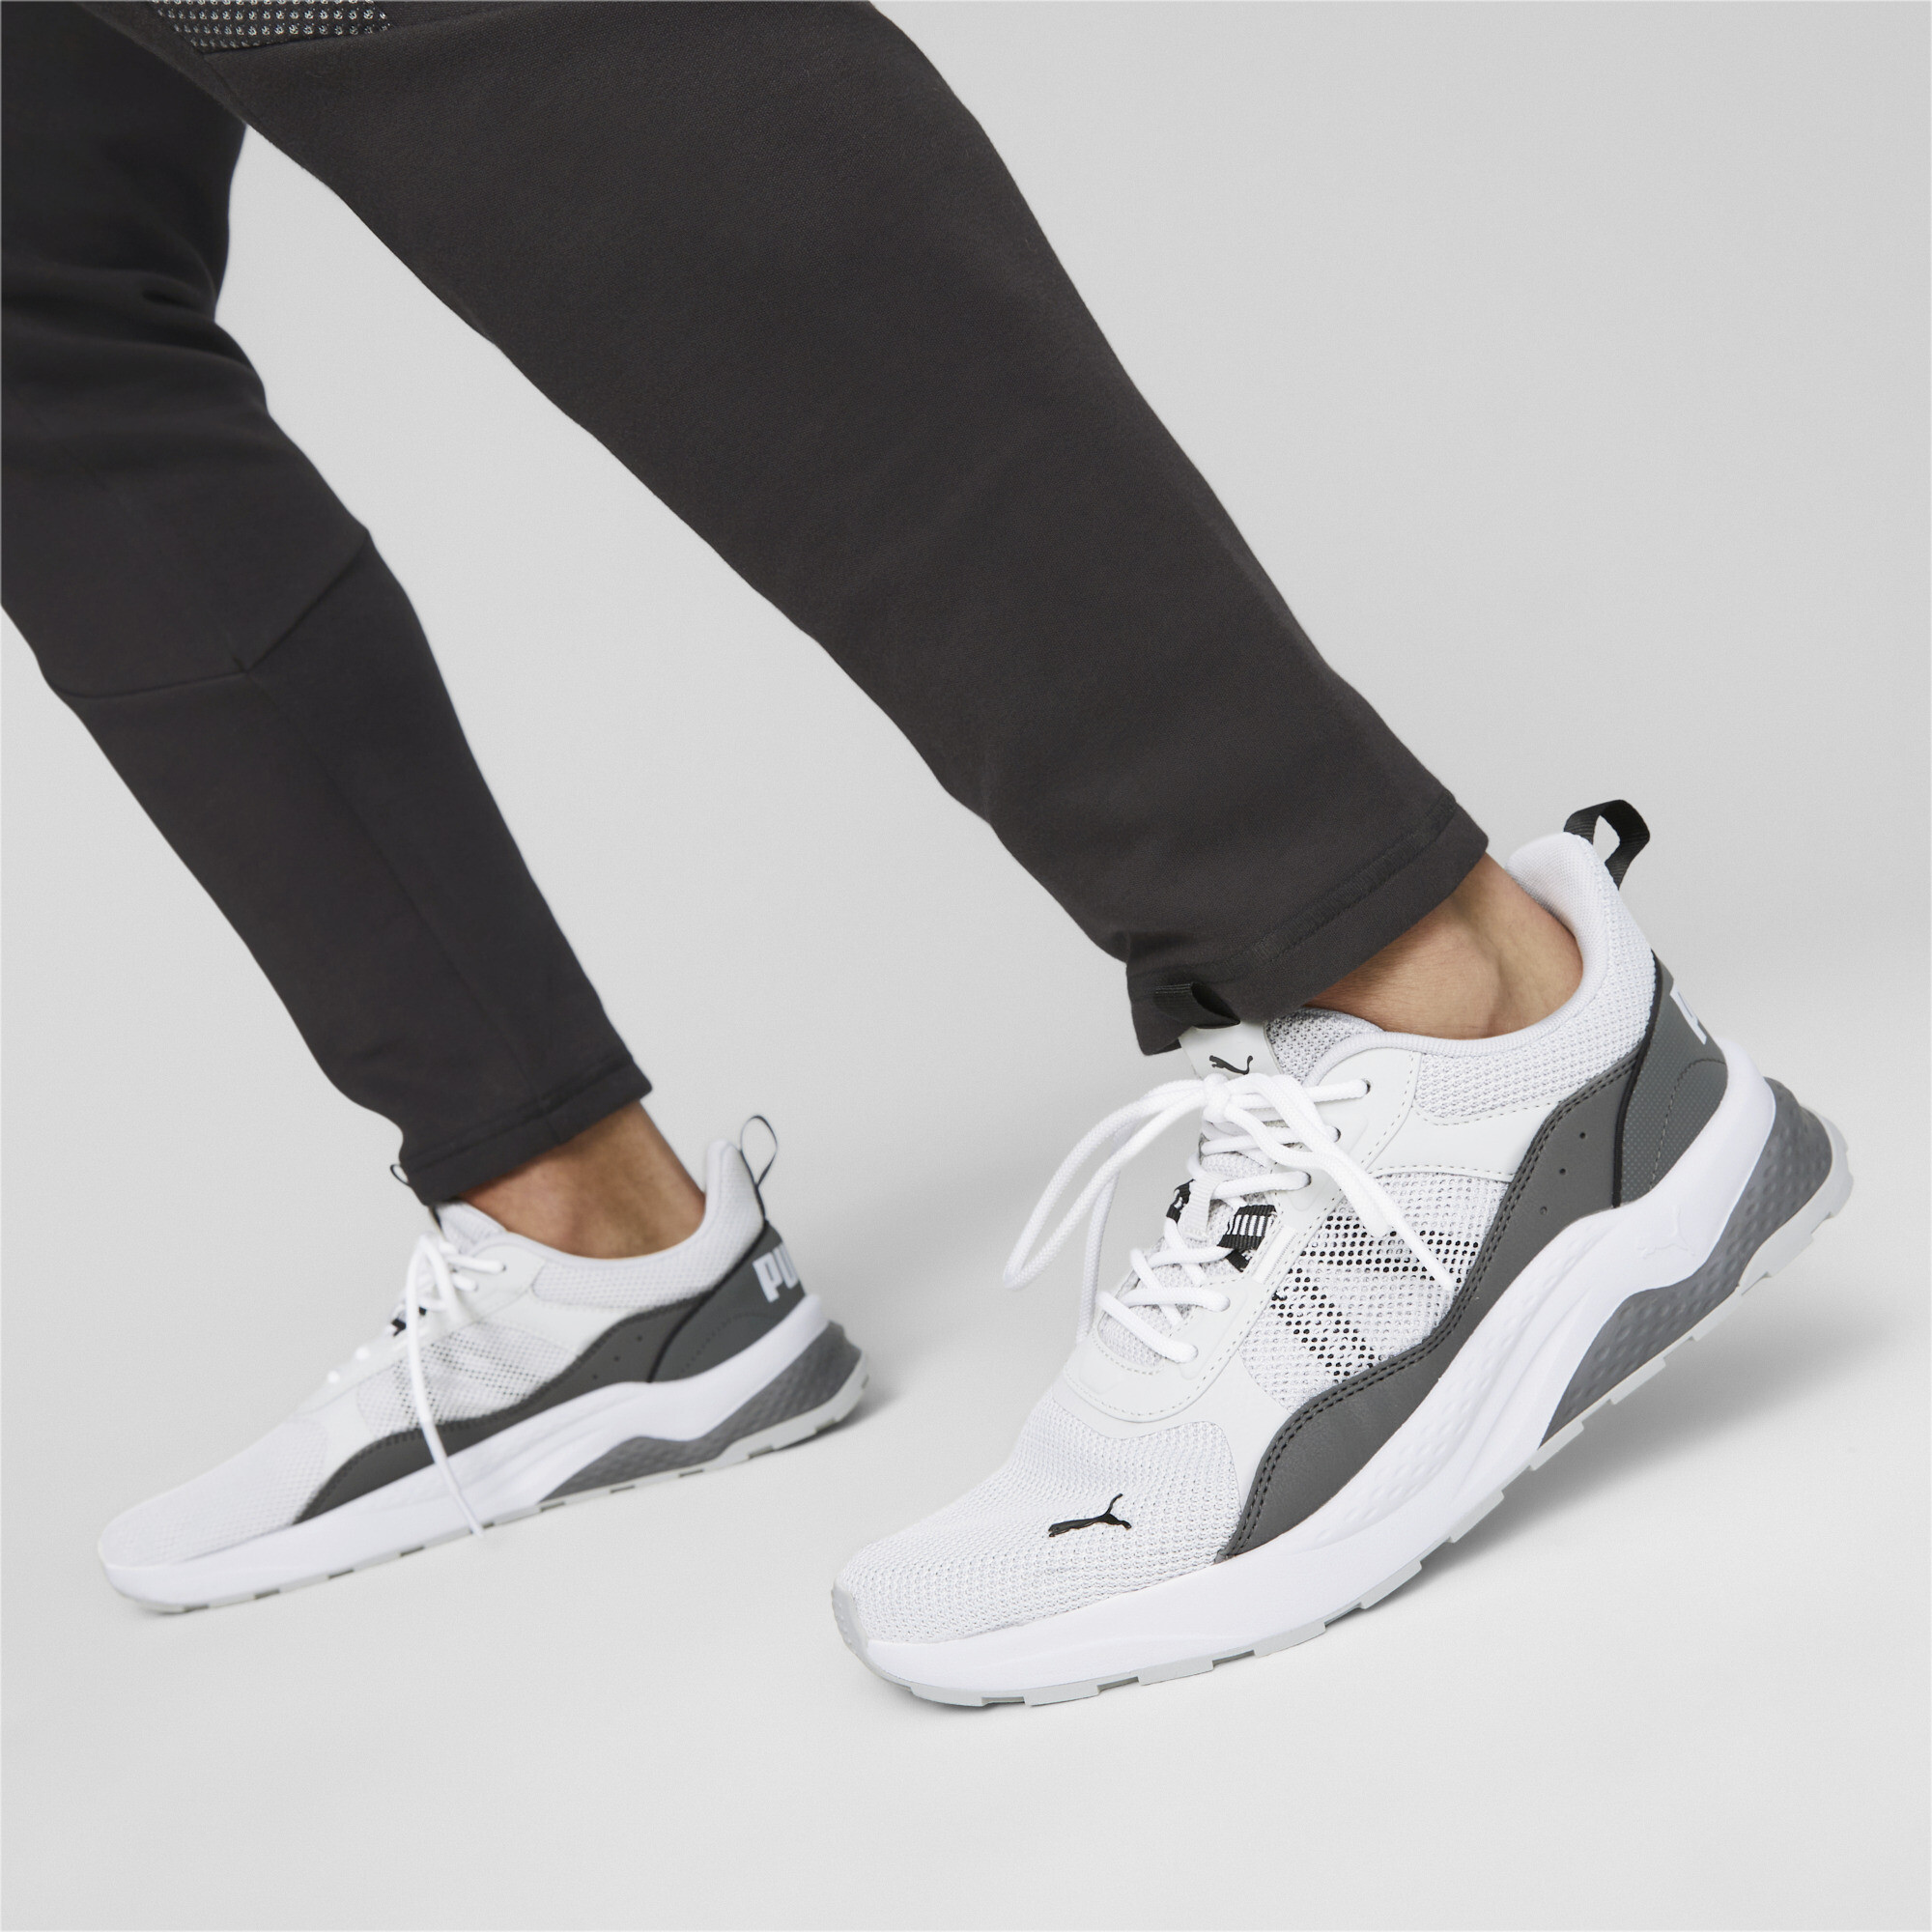 Puma Anzarun 2.0 Sneakers, Gray, Size 48, Shoes